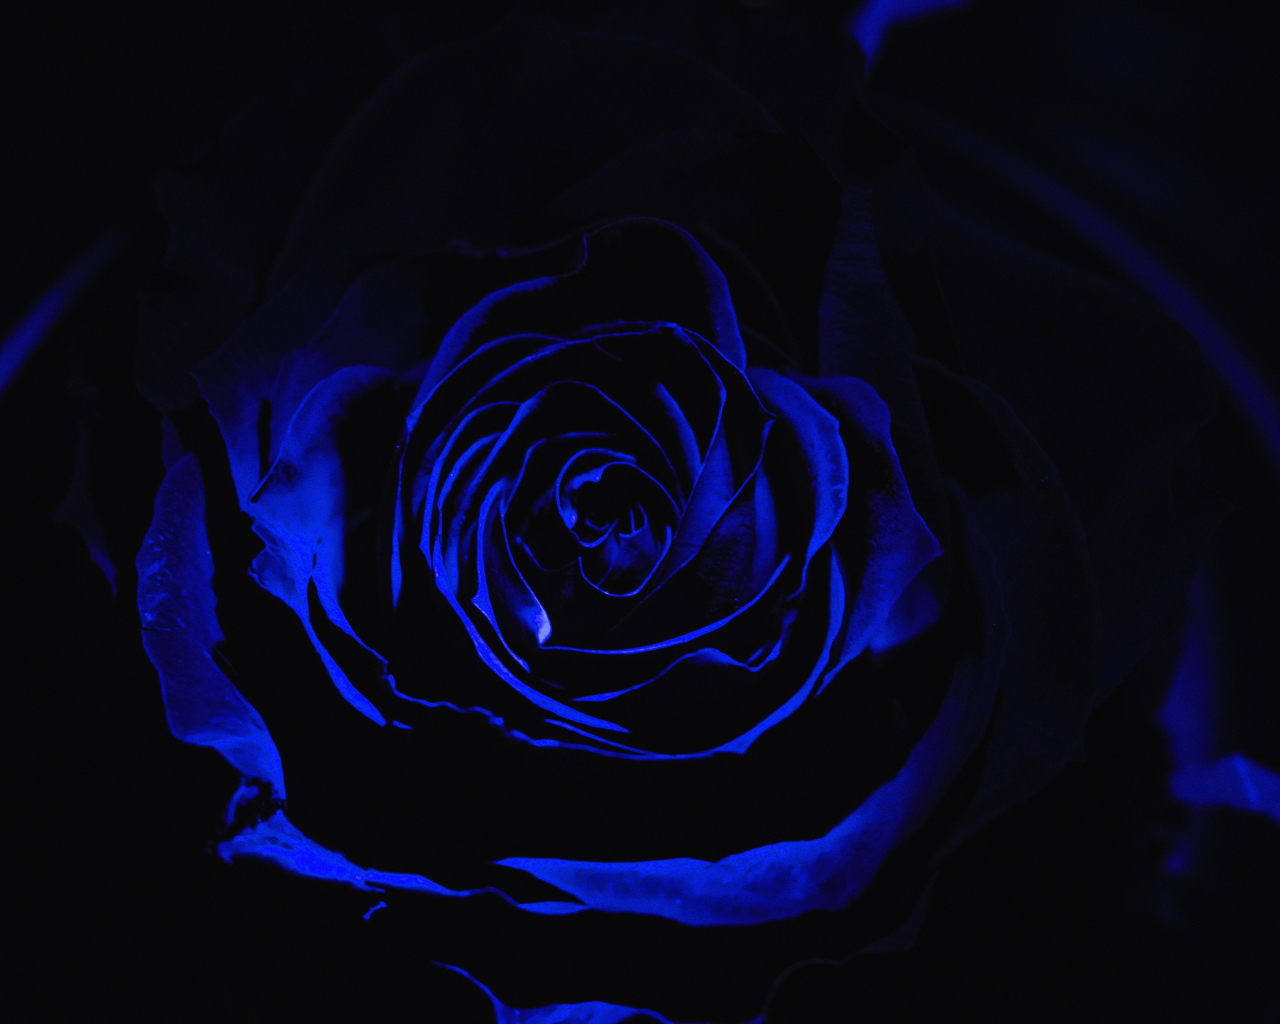 Download wallpaper 1280x1024 blue rose, dark, close up, standard 5:4 fullscreen  wallpaper, 1280x1024 hd background, 10127